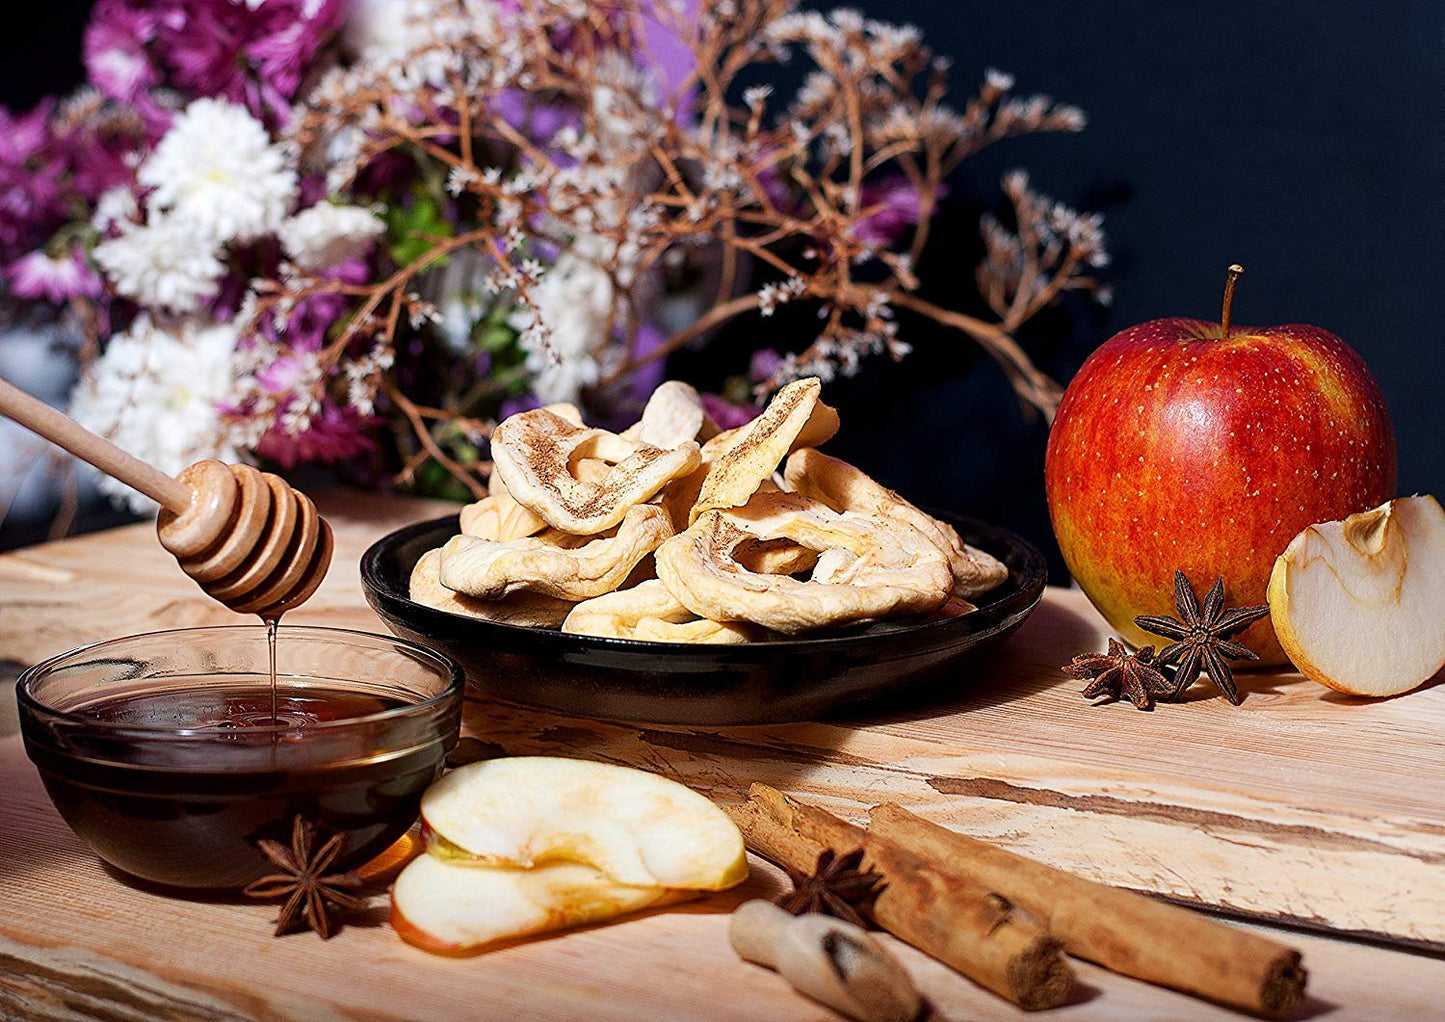 Organic Dried Apple Rings - Non-GMO, Kosher, Raw, Vegan, Unsulfured, Sirtfood, Bulk - by Food to Live